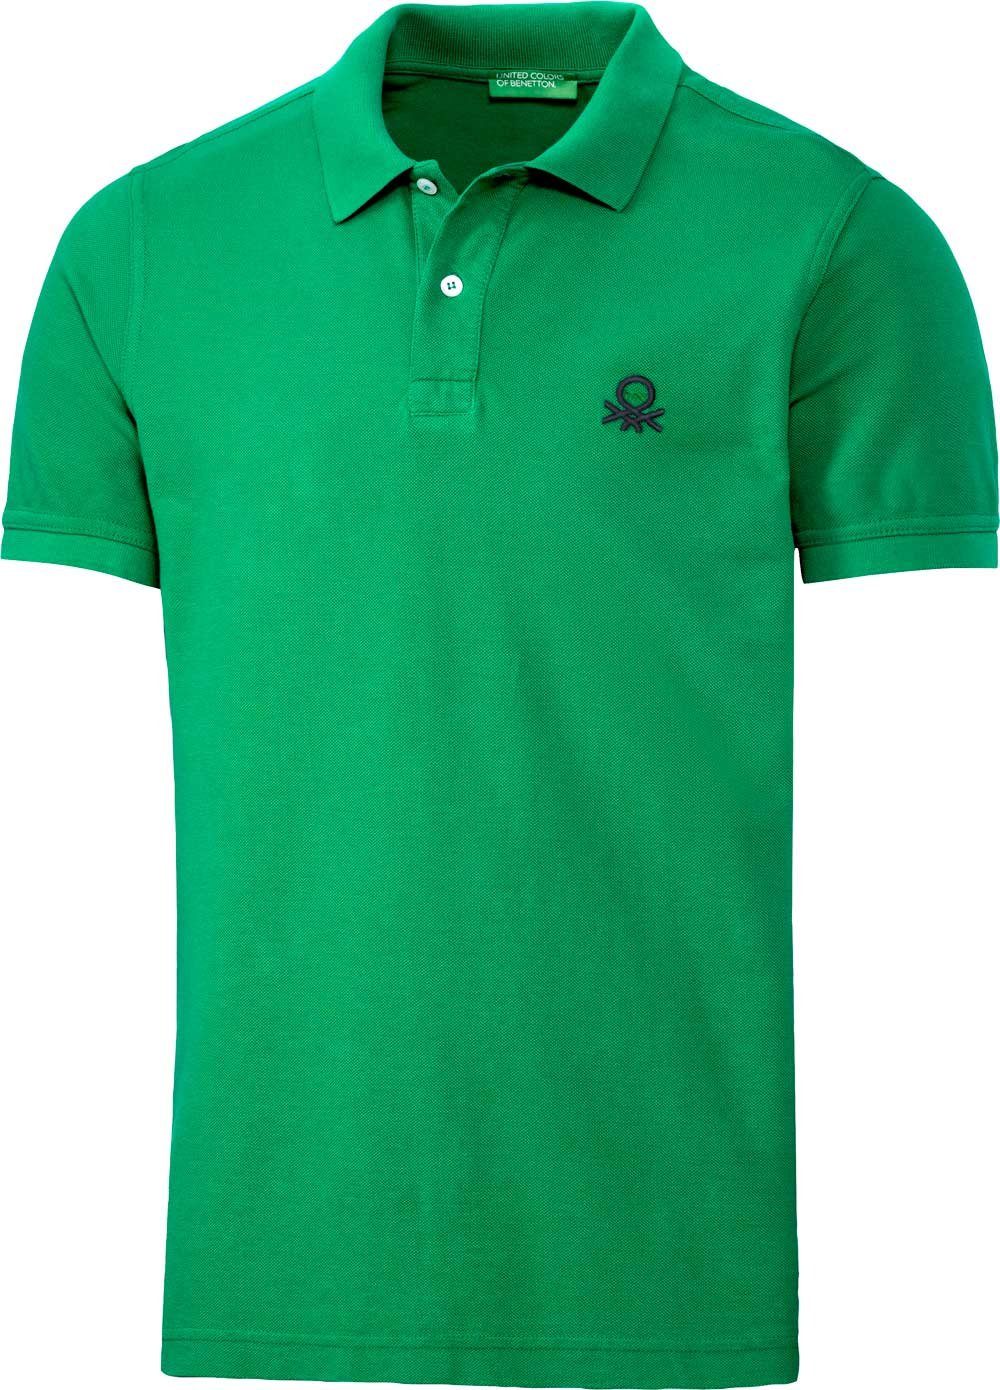 United Colors of Benetton Poloshirt aus Baumwolle grün